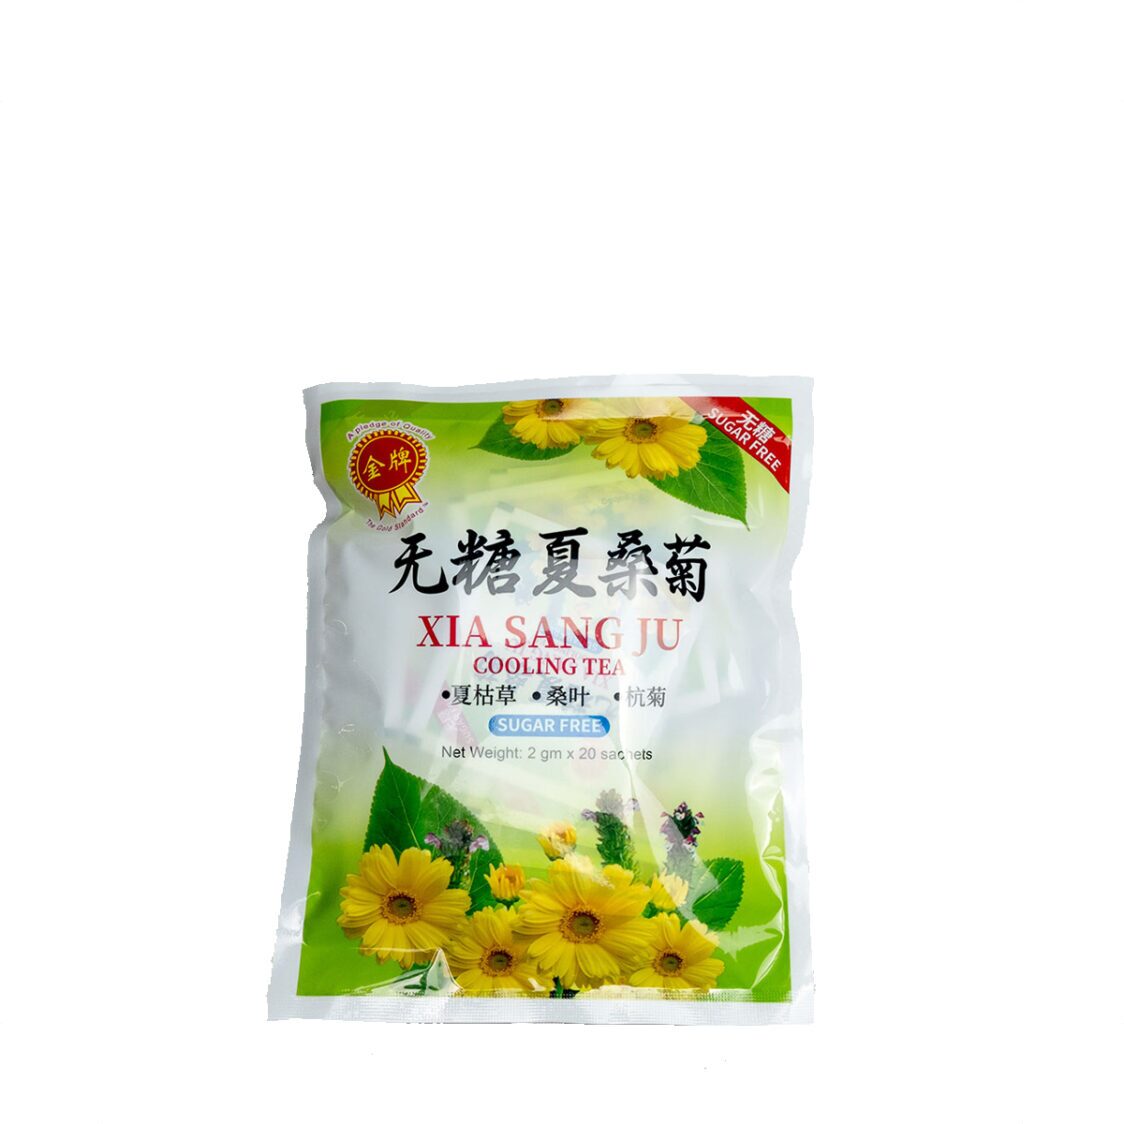 Winlykah TCM The Gold Standard Sugar Free Xia Sang Ju Cooling Tea 2mg x 20 Sachets